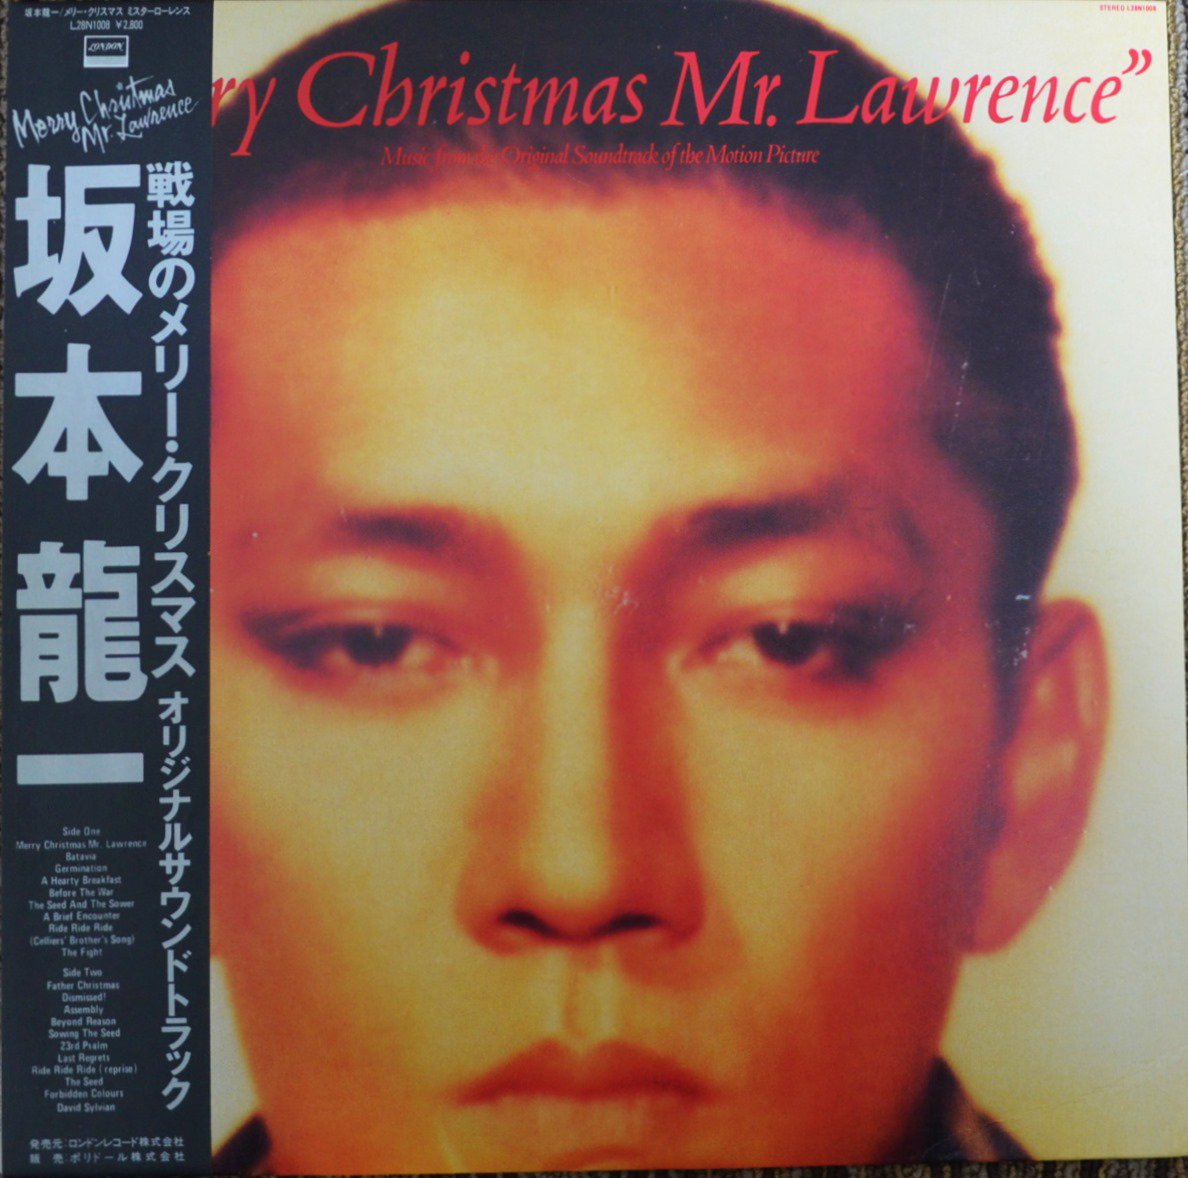 O S T 坂本龍一 Ryuichi Sakamoto 戦場のメリー クリスマス Merry Christmas Mr Lawrence Lp Hip Tank Records